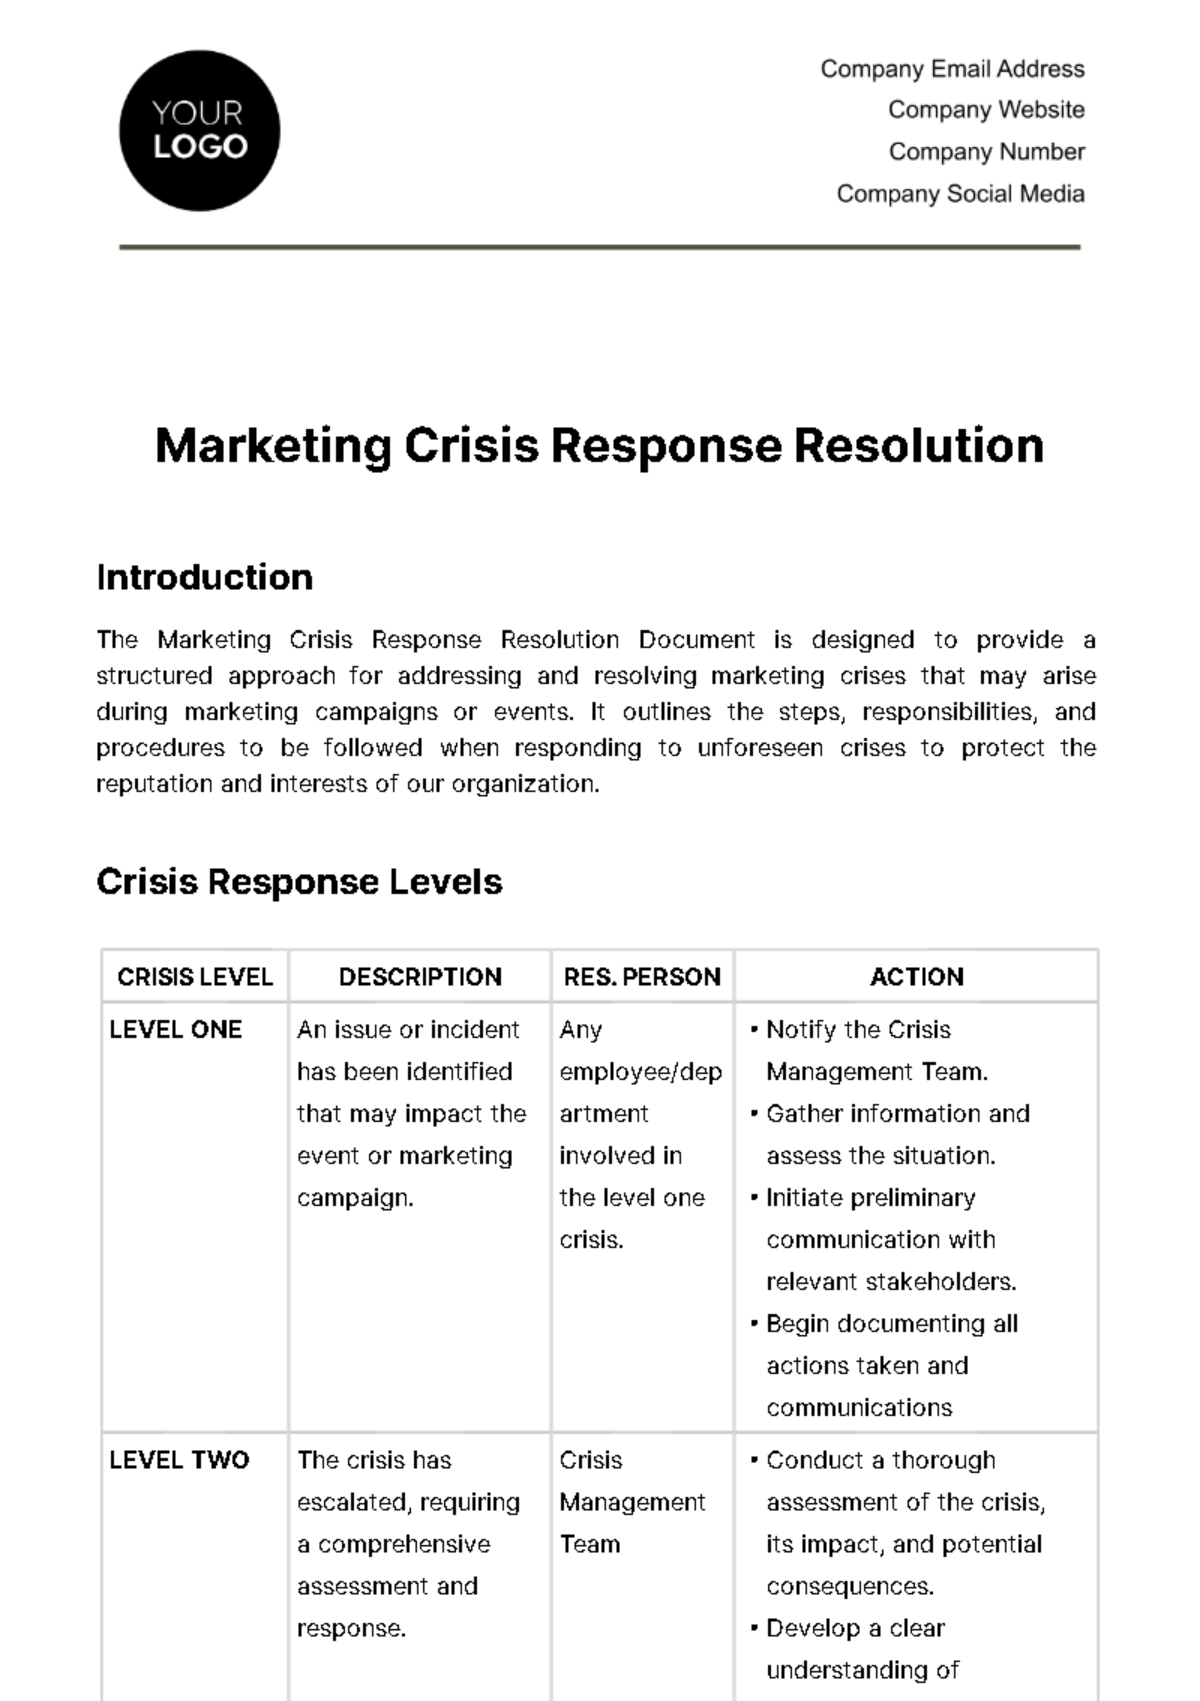 Marketing Crisis Response Resolution Template